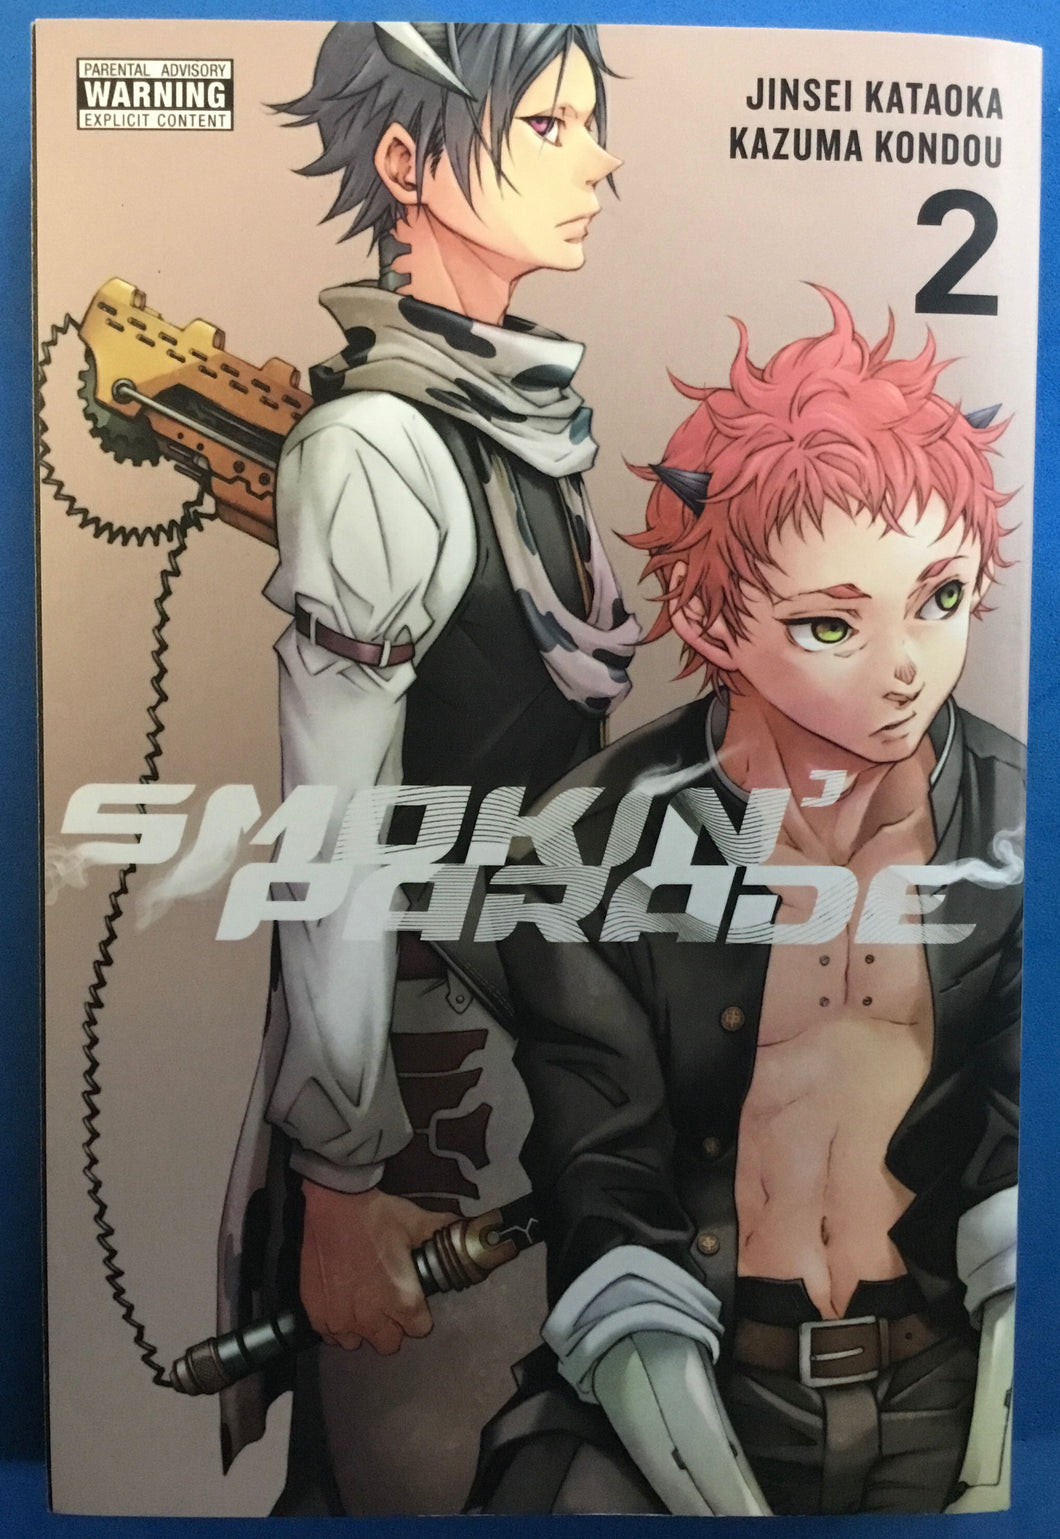 Smokin’ Parade Volume 2 by Jinsei Kataoka 2017 Yen Press